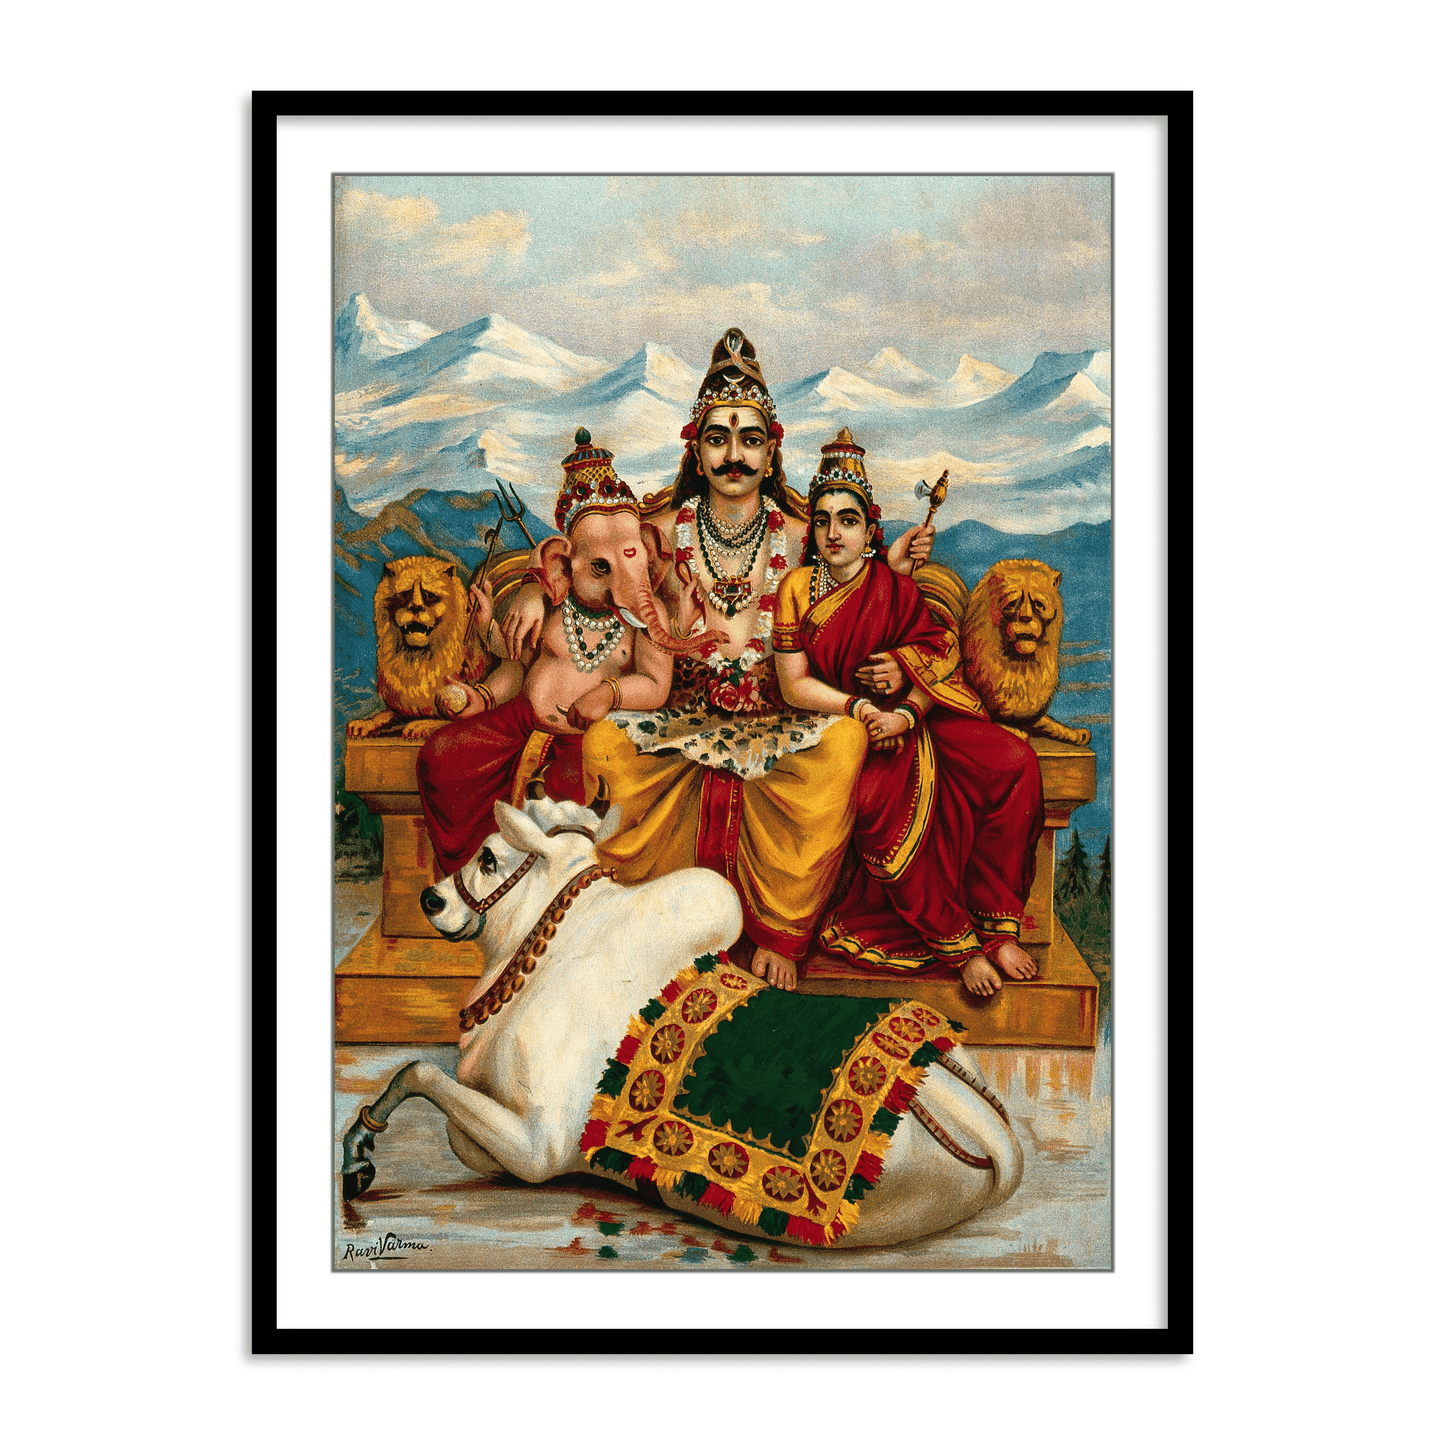 Shiva, Parvati and Ganesha enthroned on Mount Kailas by Raja Ravi Varma Wall Art Print